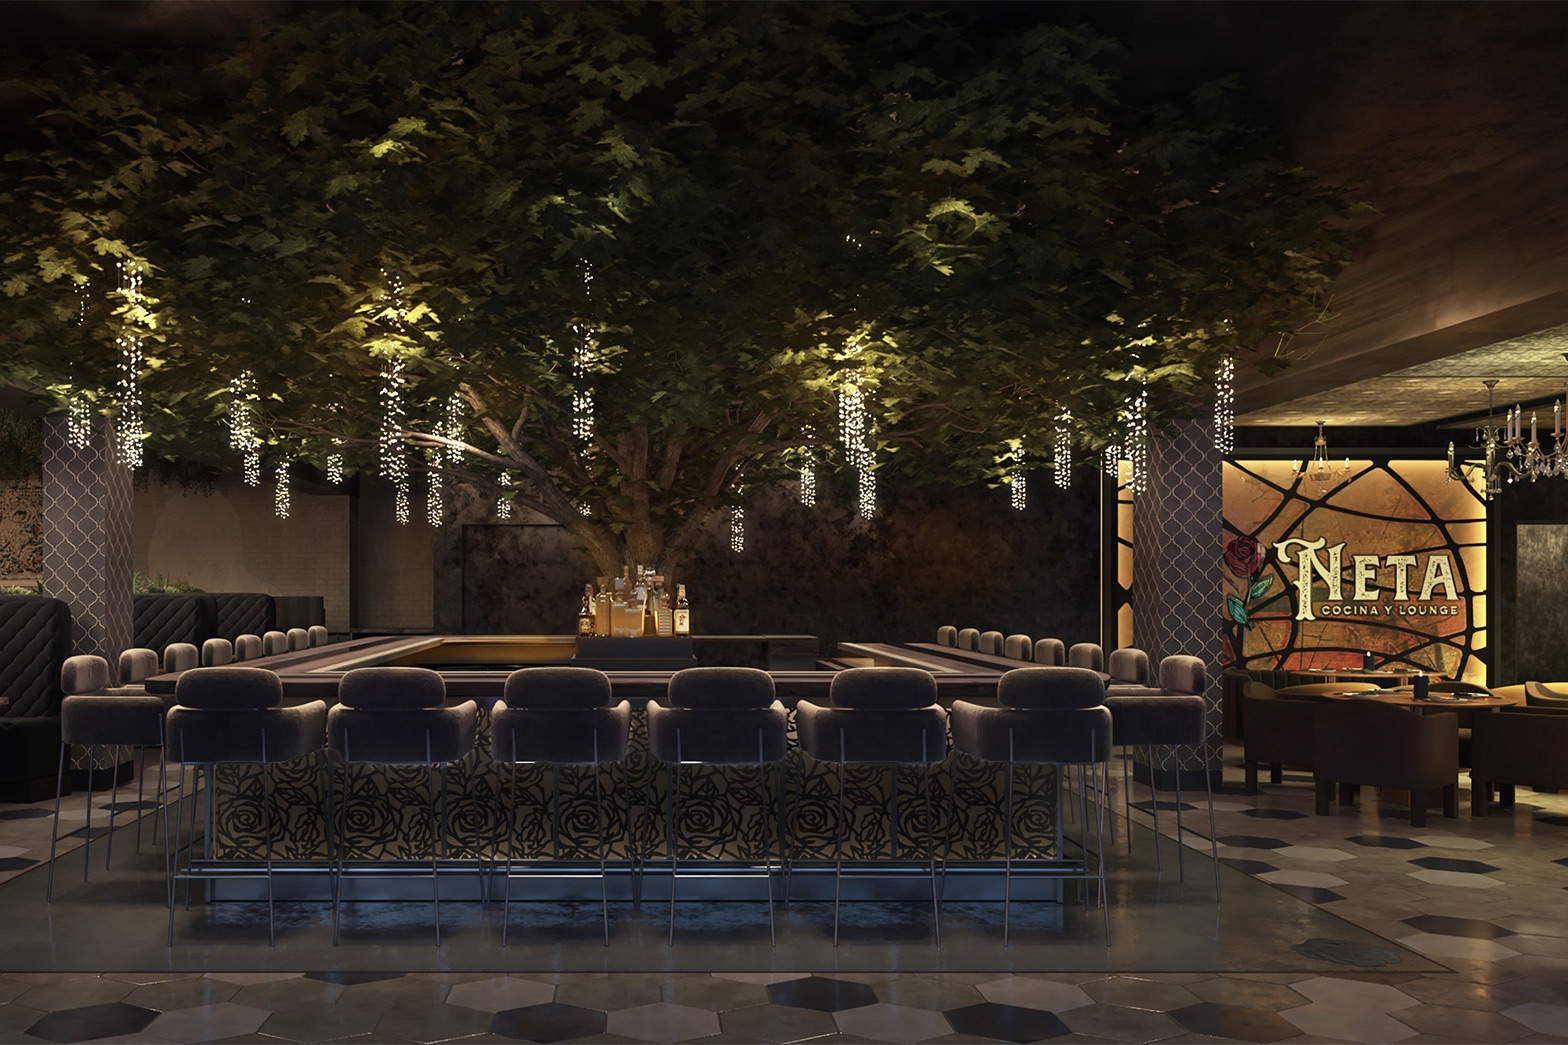 La Neta Cocina y Lounge interior with chairs and greenery overhead